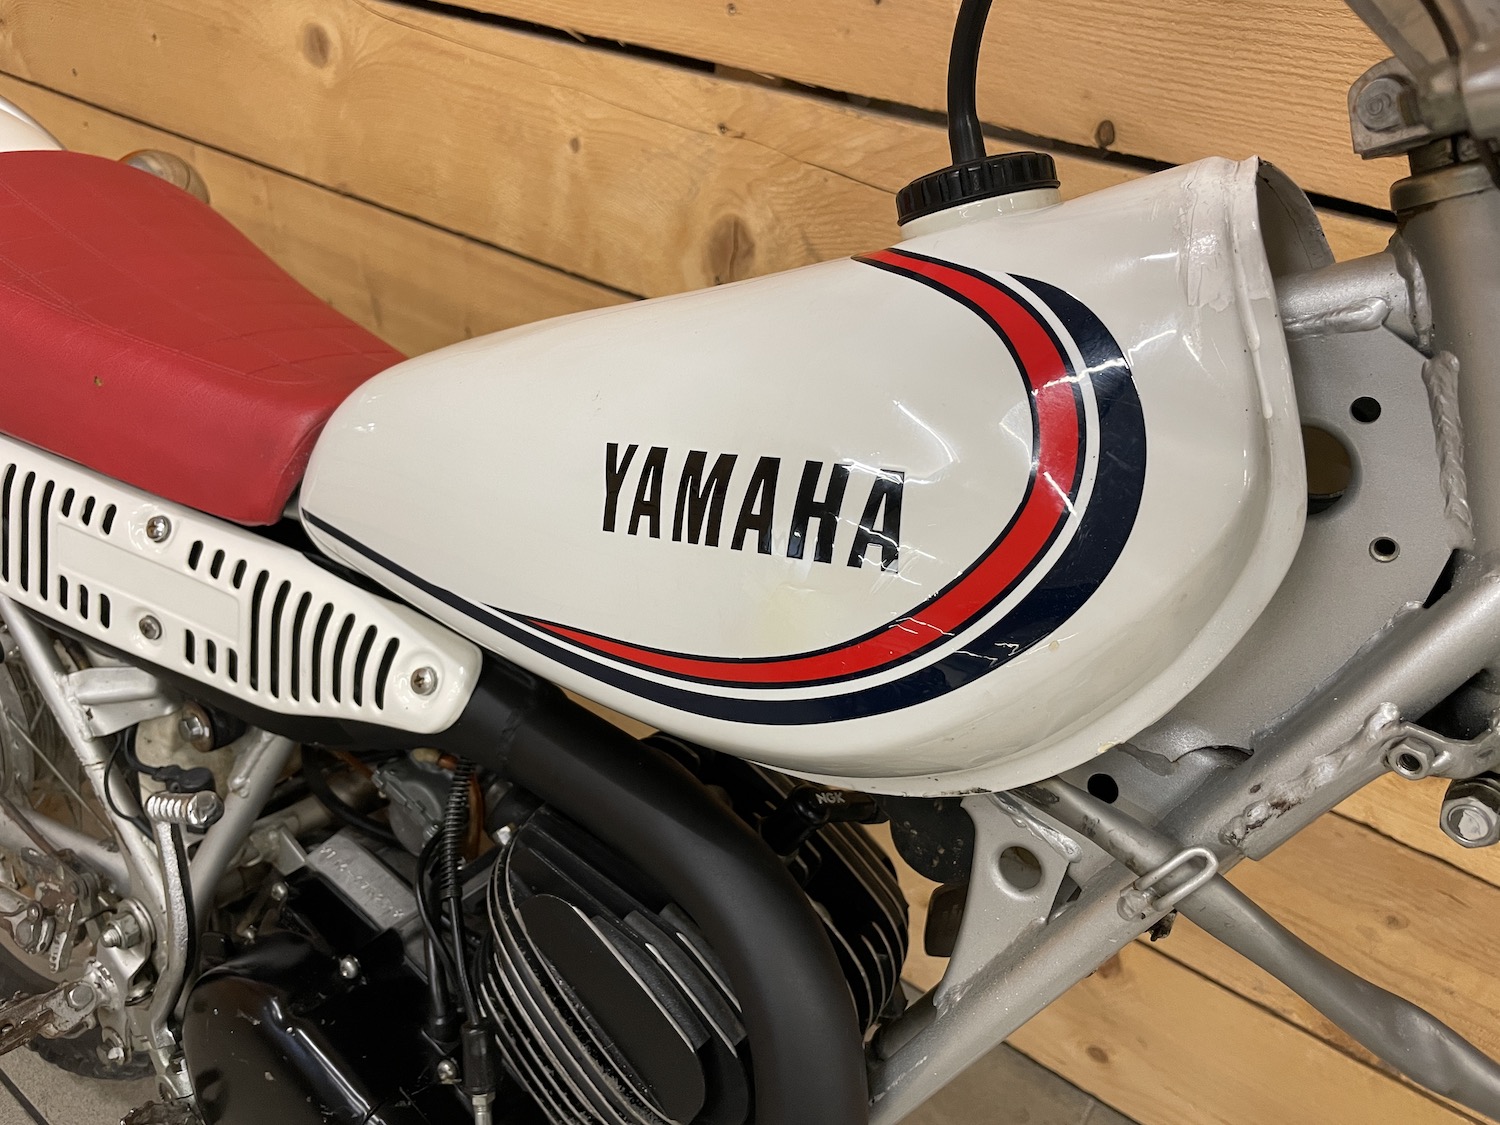 Yamaha_TY125_cezanne_classic_motorcycle_8-113.jpg